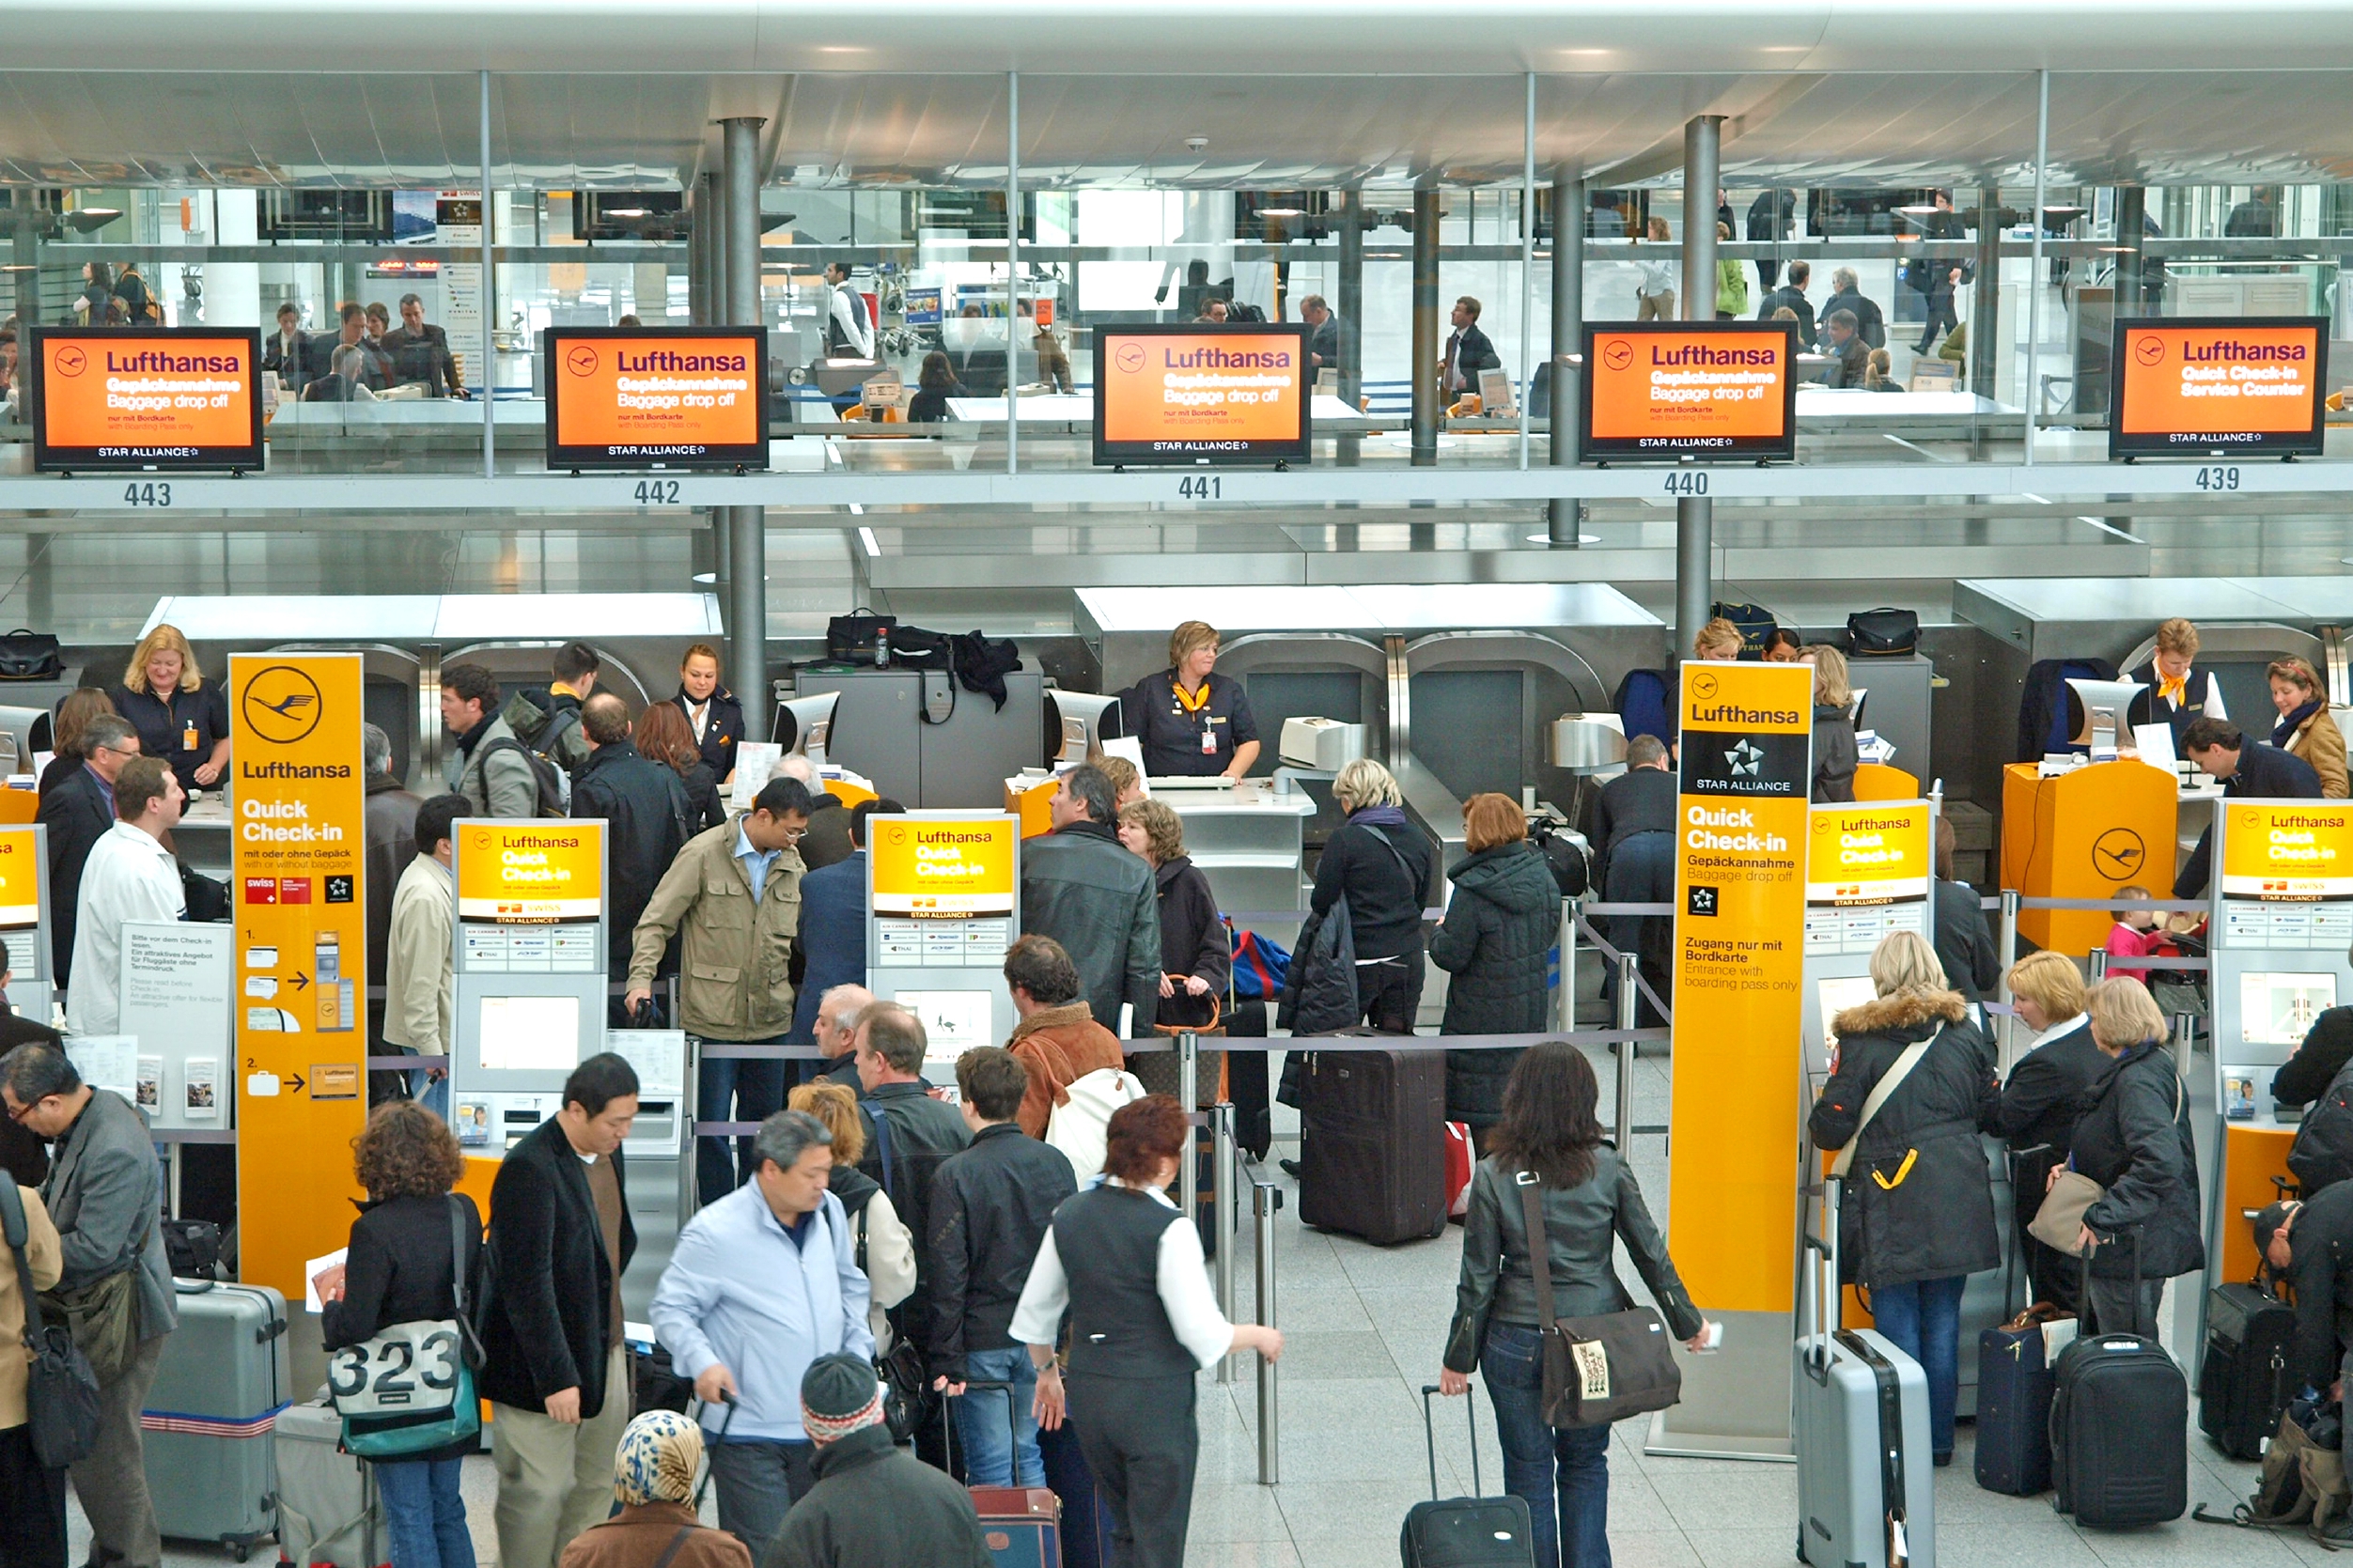 Lufthansa check-in area at Munich terminal 2